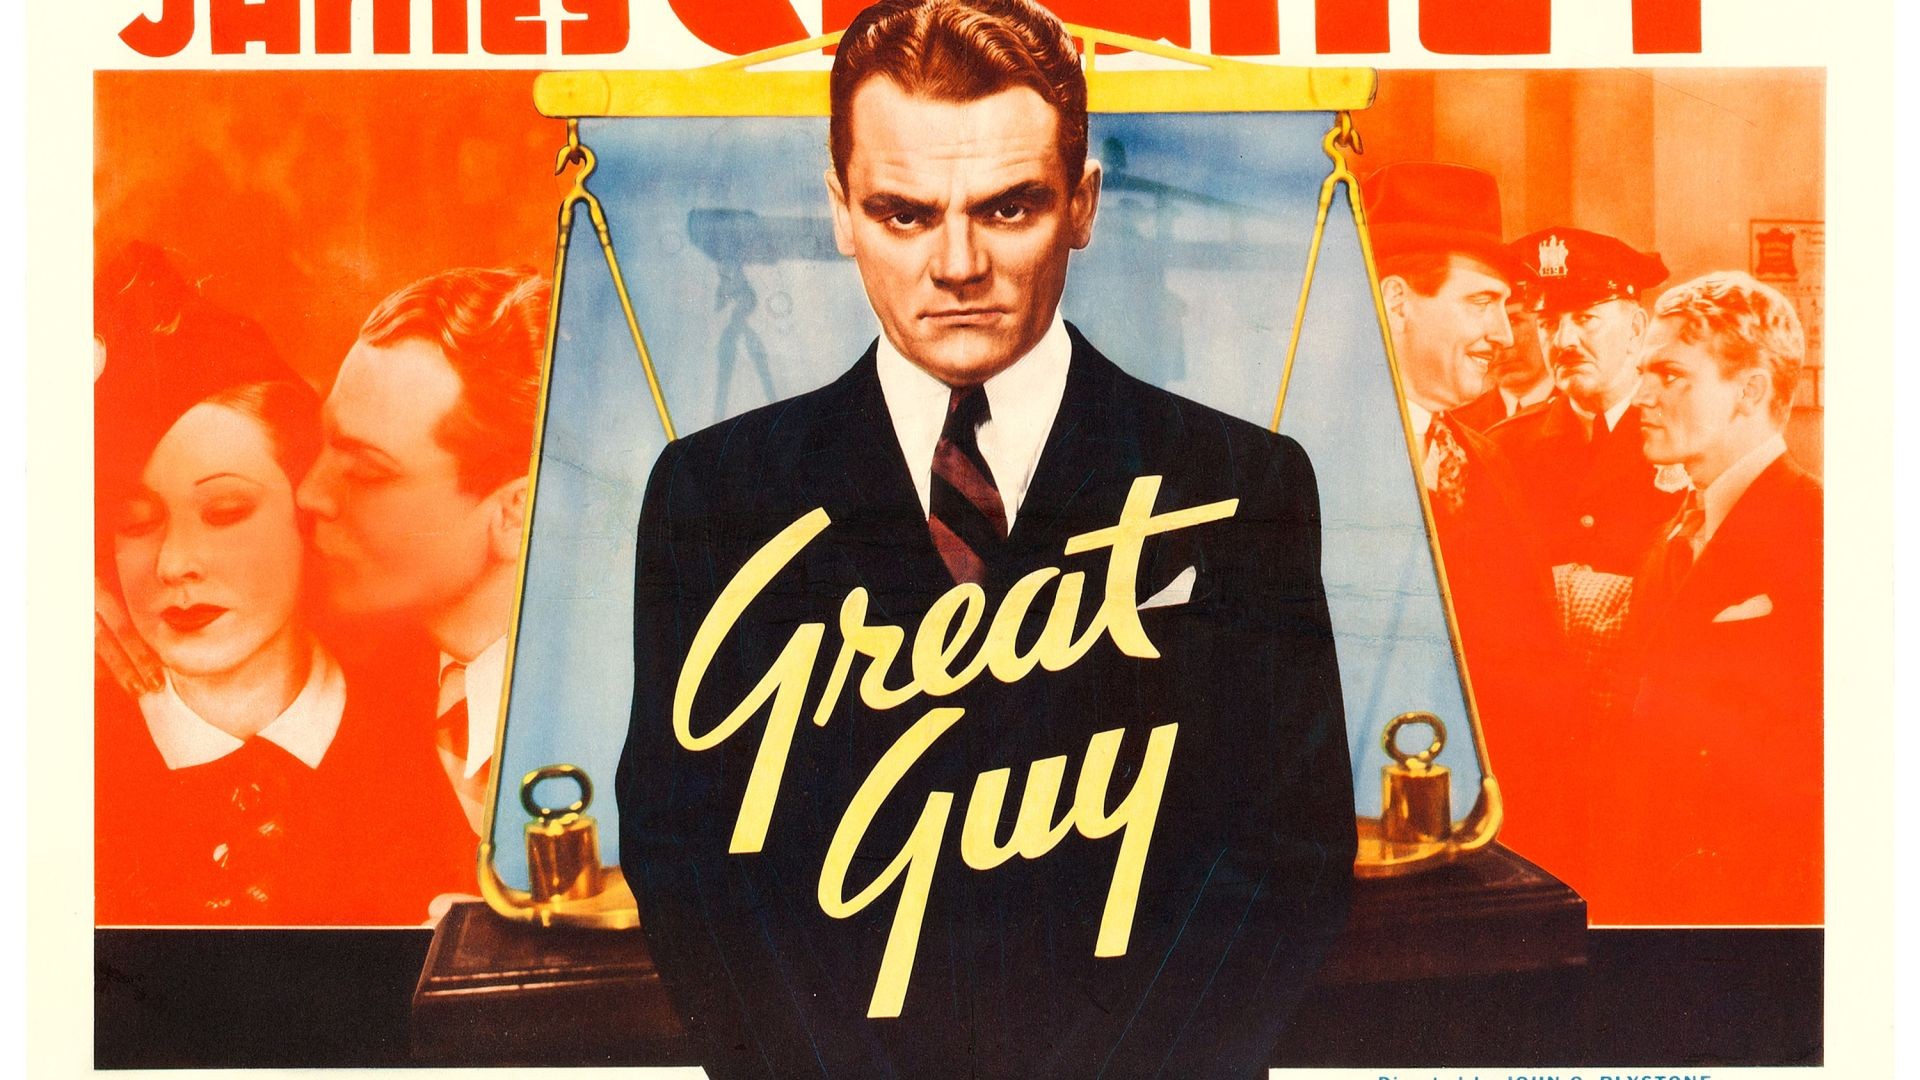 Great Guy (1936)